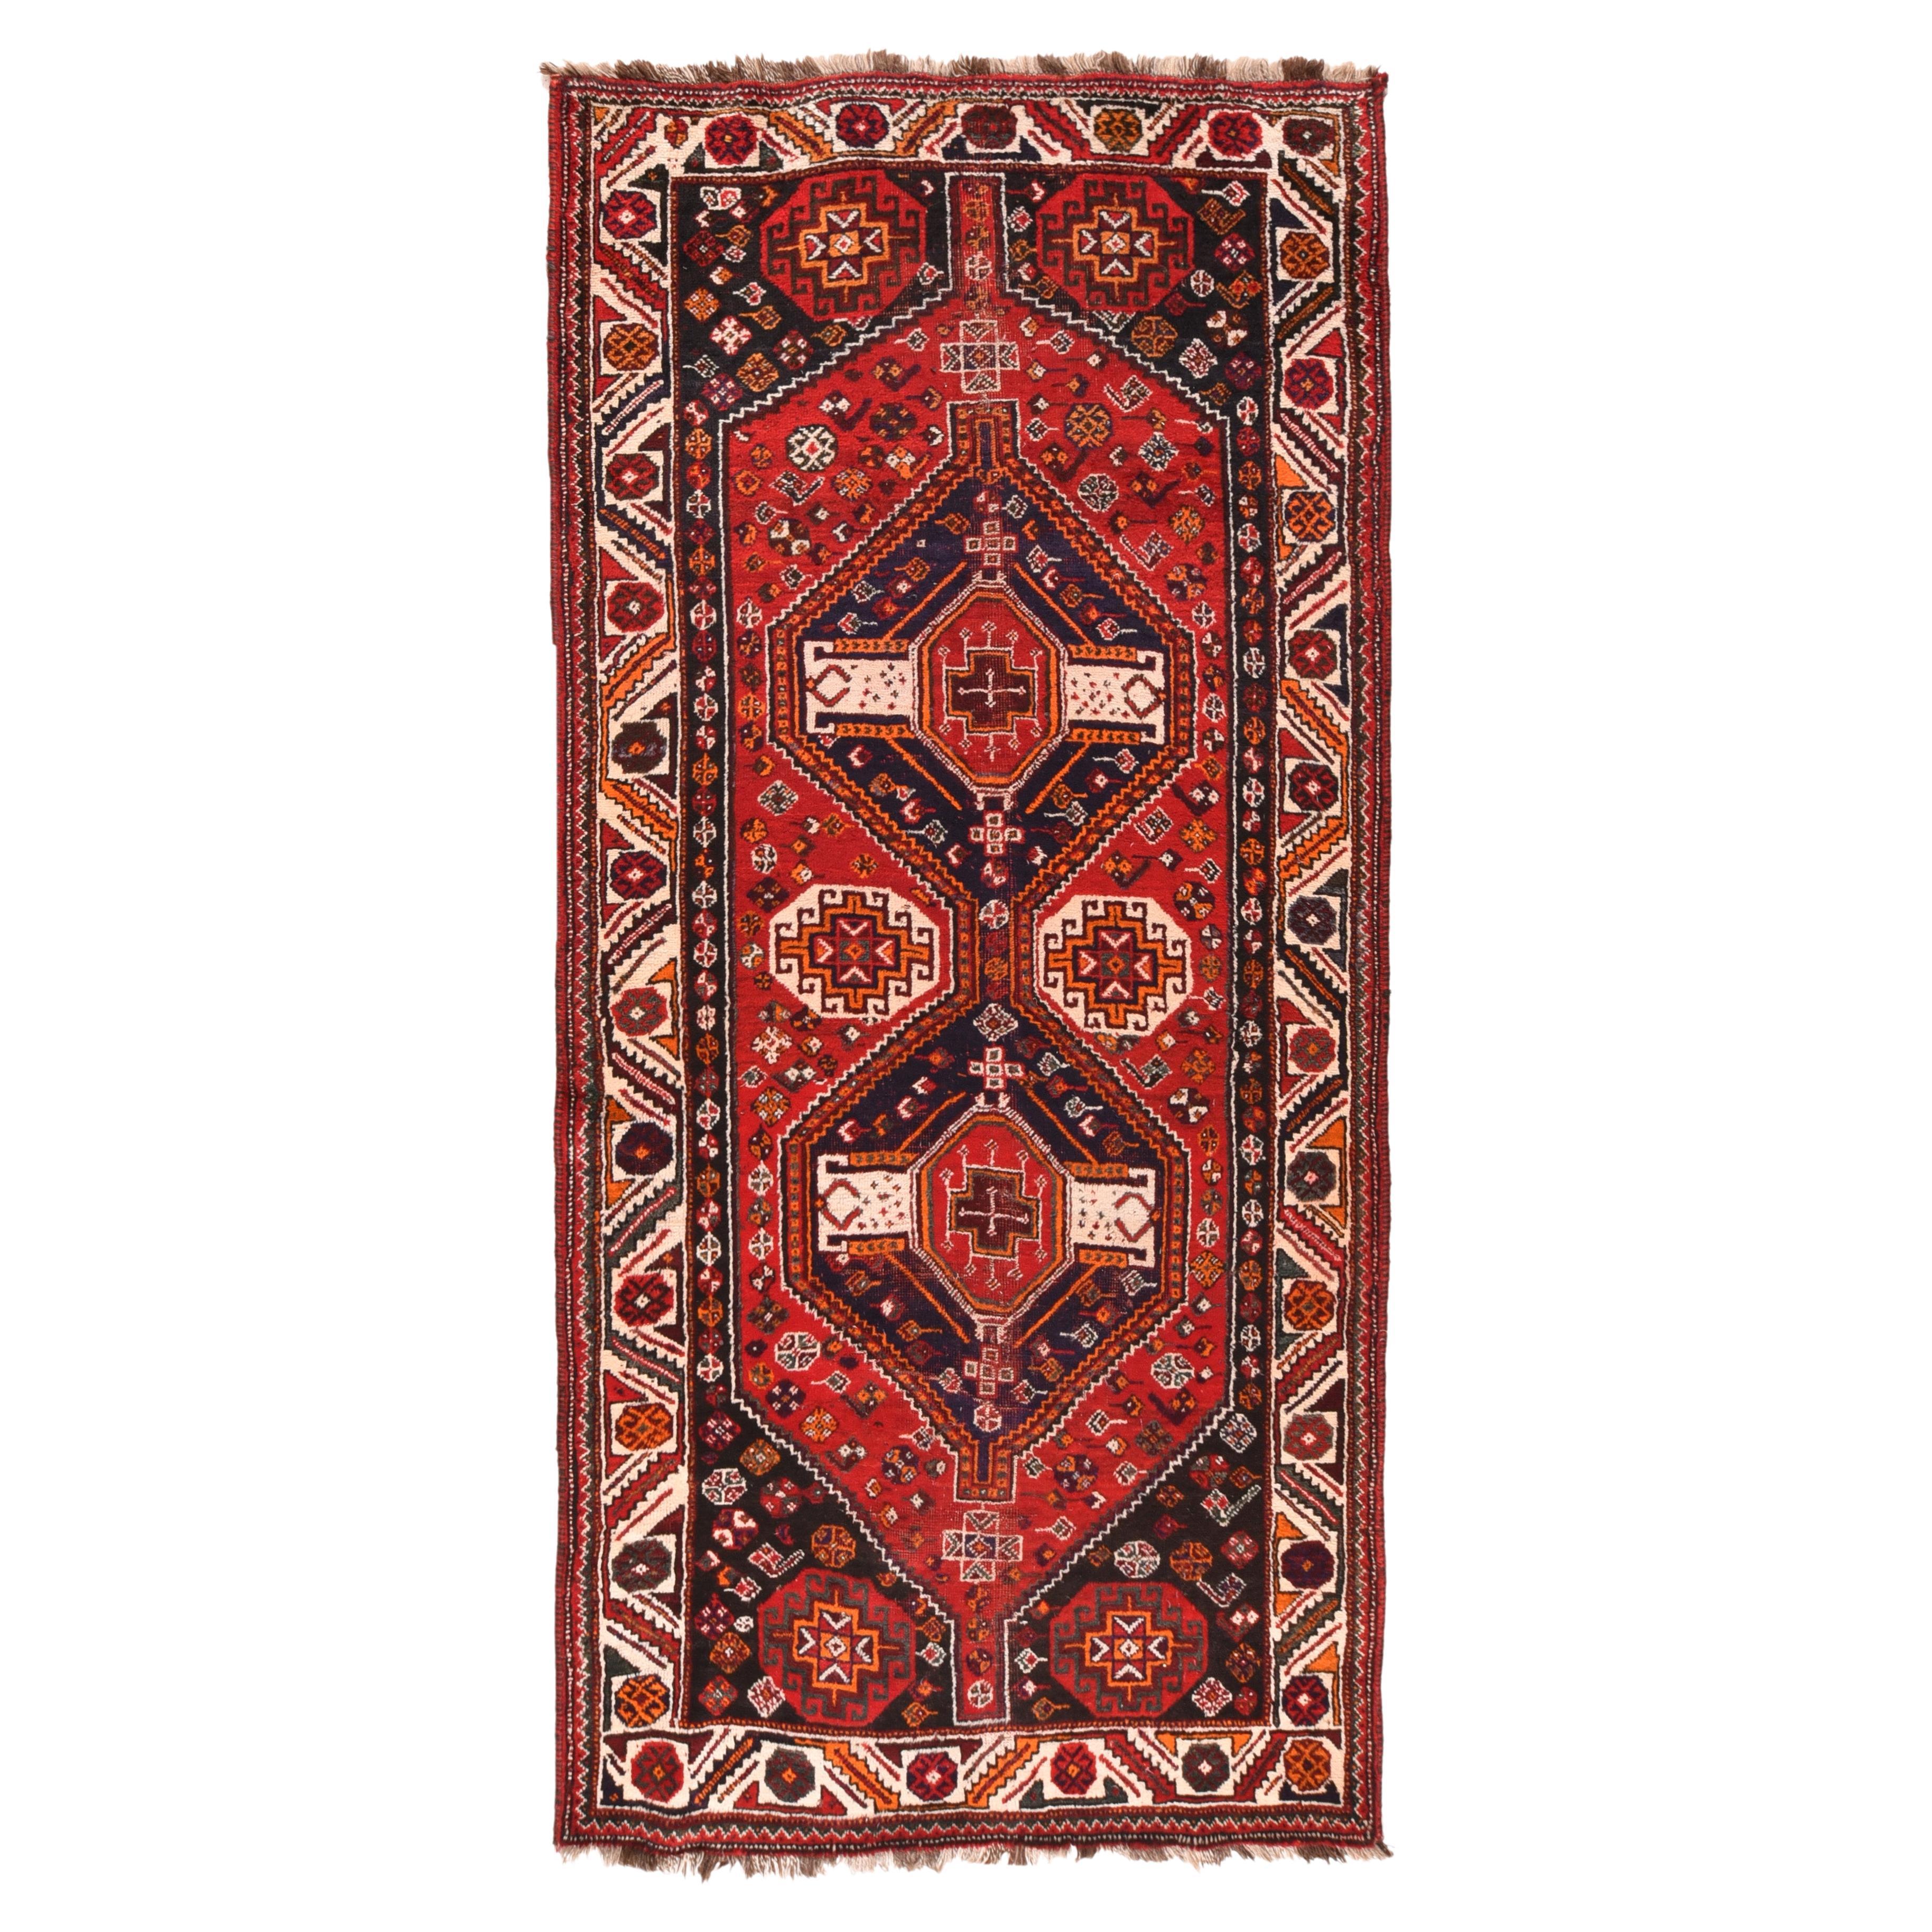 Shiraz-Teppich 4'5'' x 9'4'' im Vintage-Stil